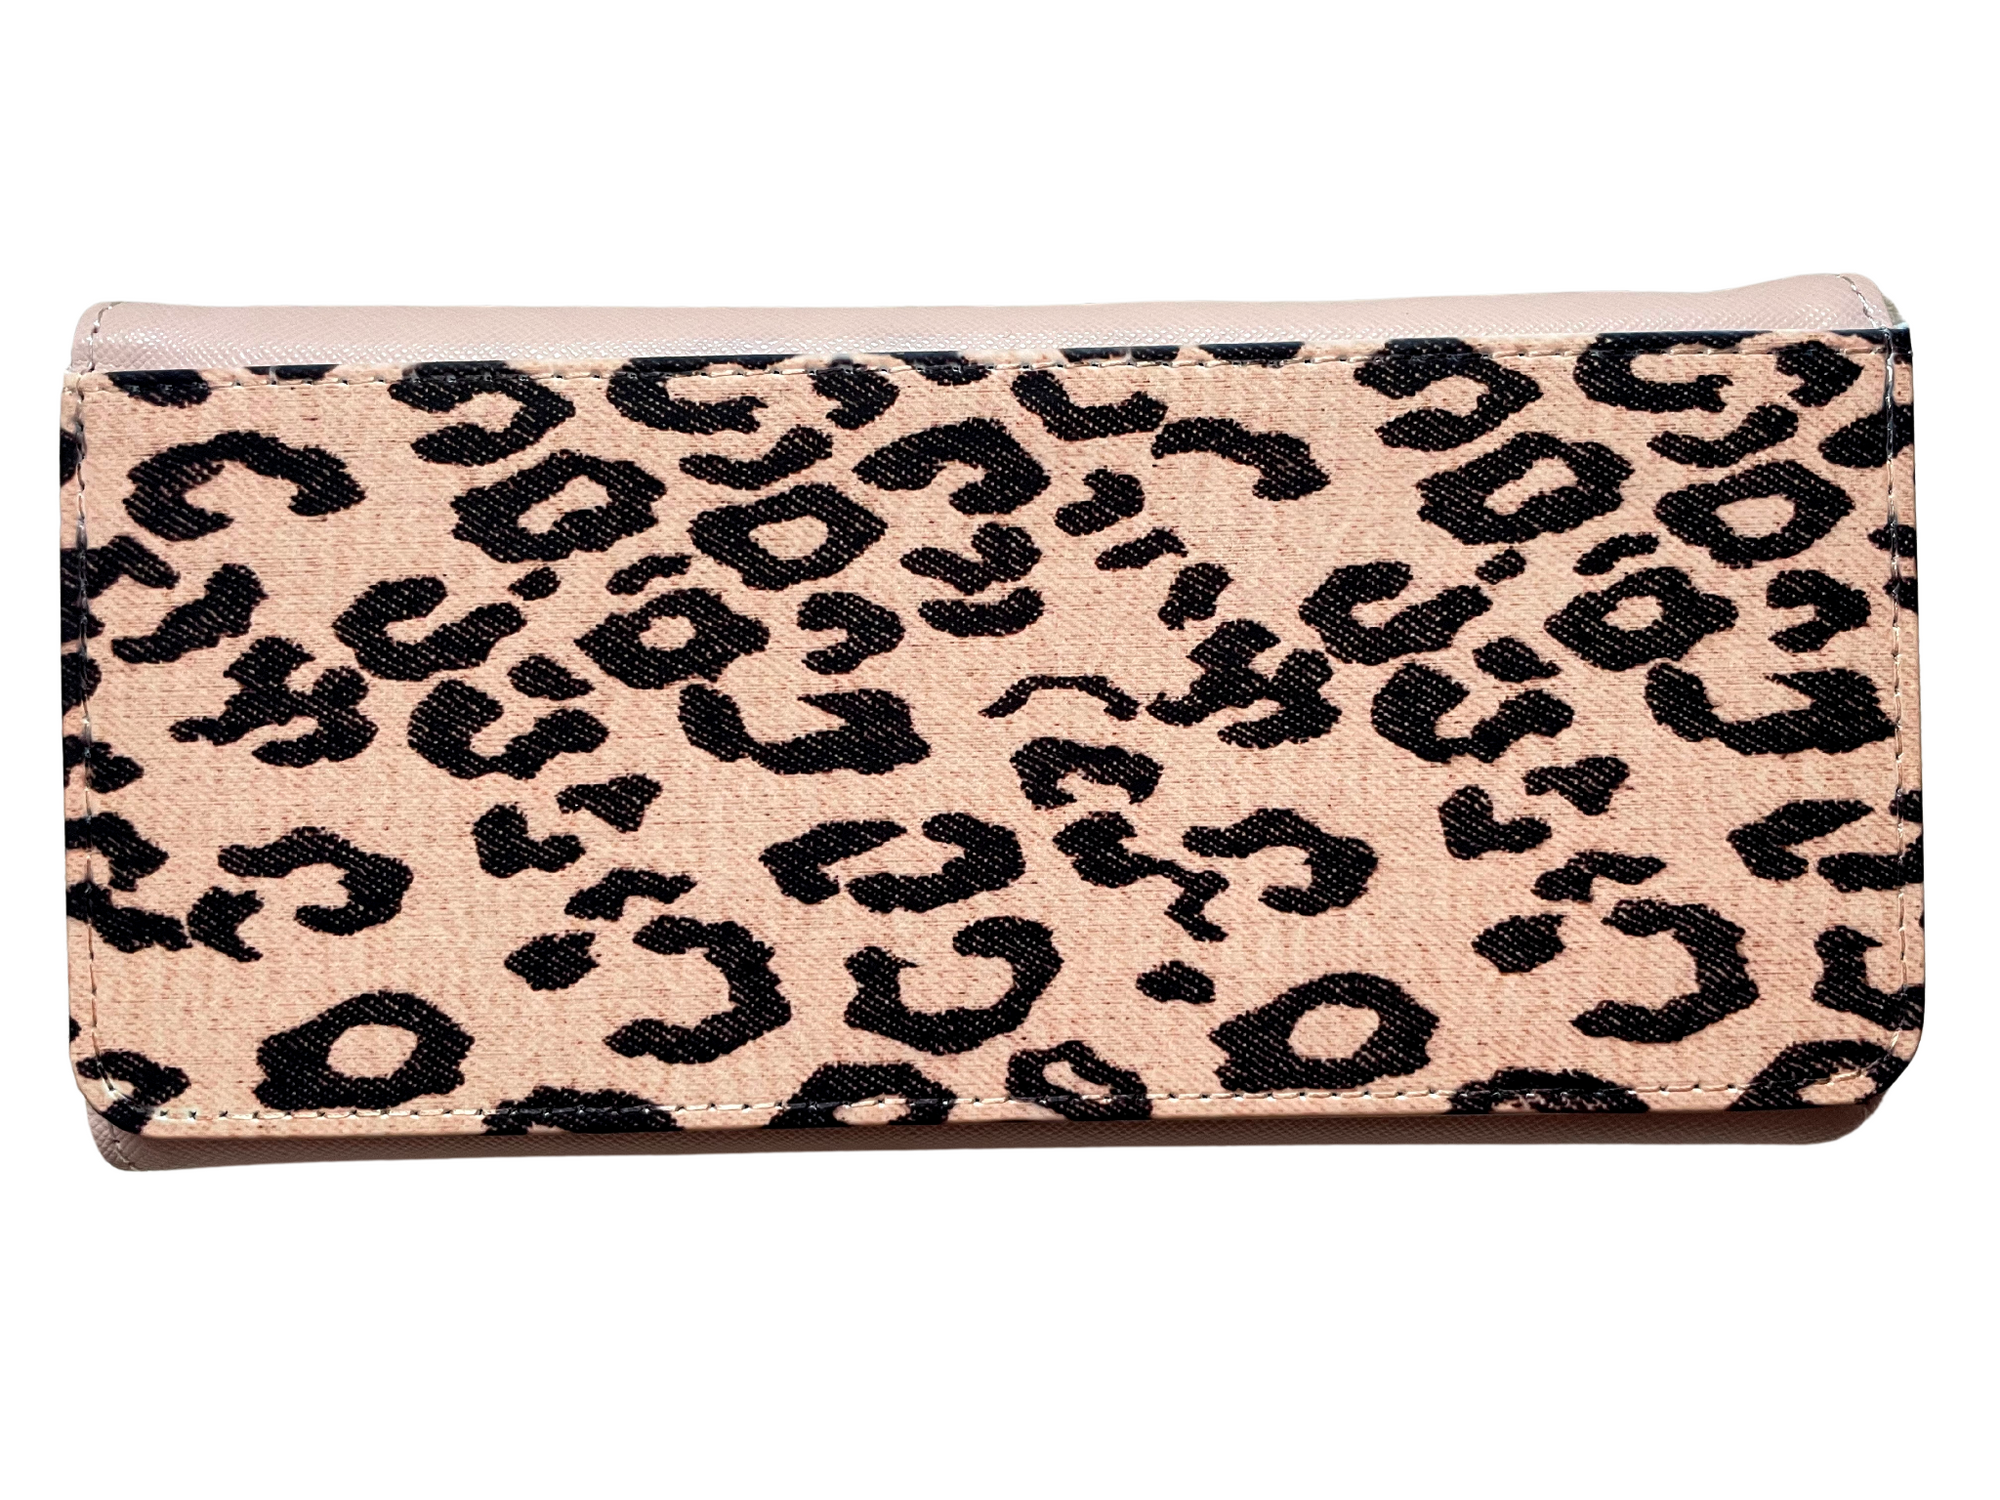 Kirawallet Rainbow Leopard Textured Animal Print - Bags from Moda in Pelle  UK